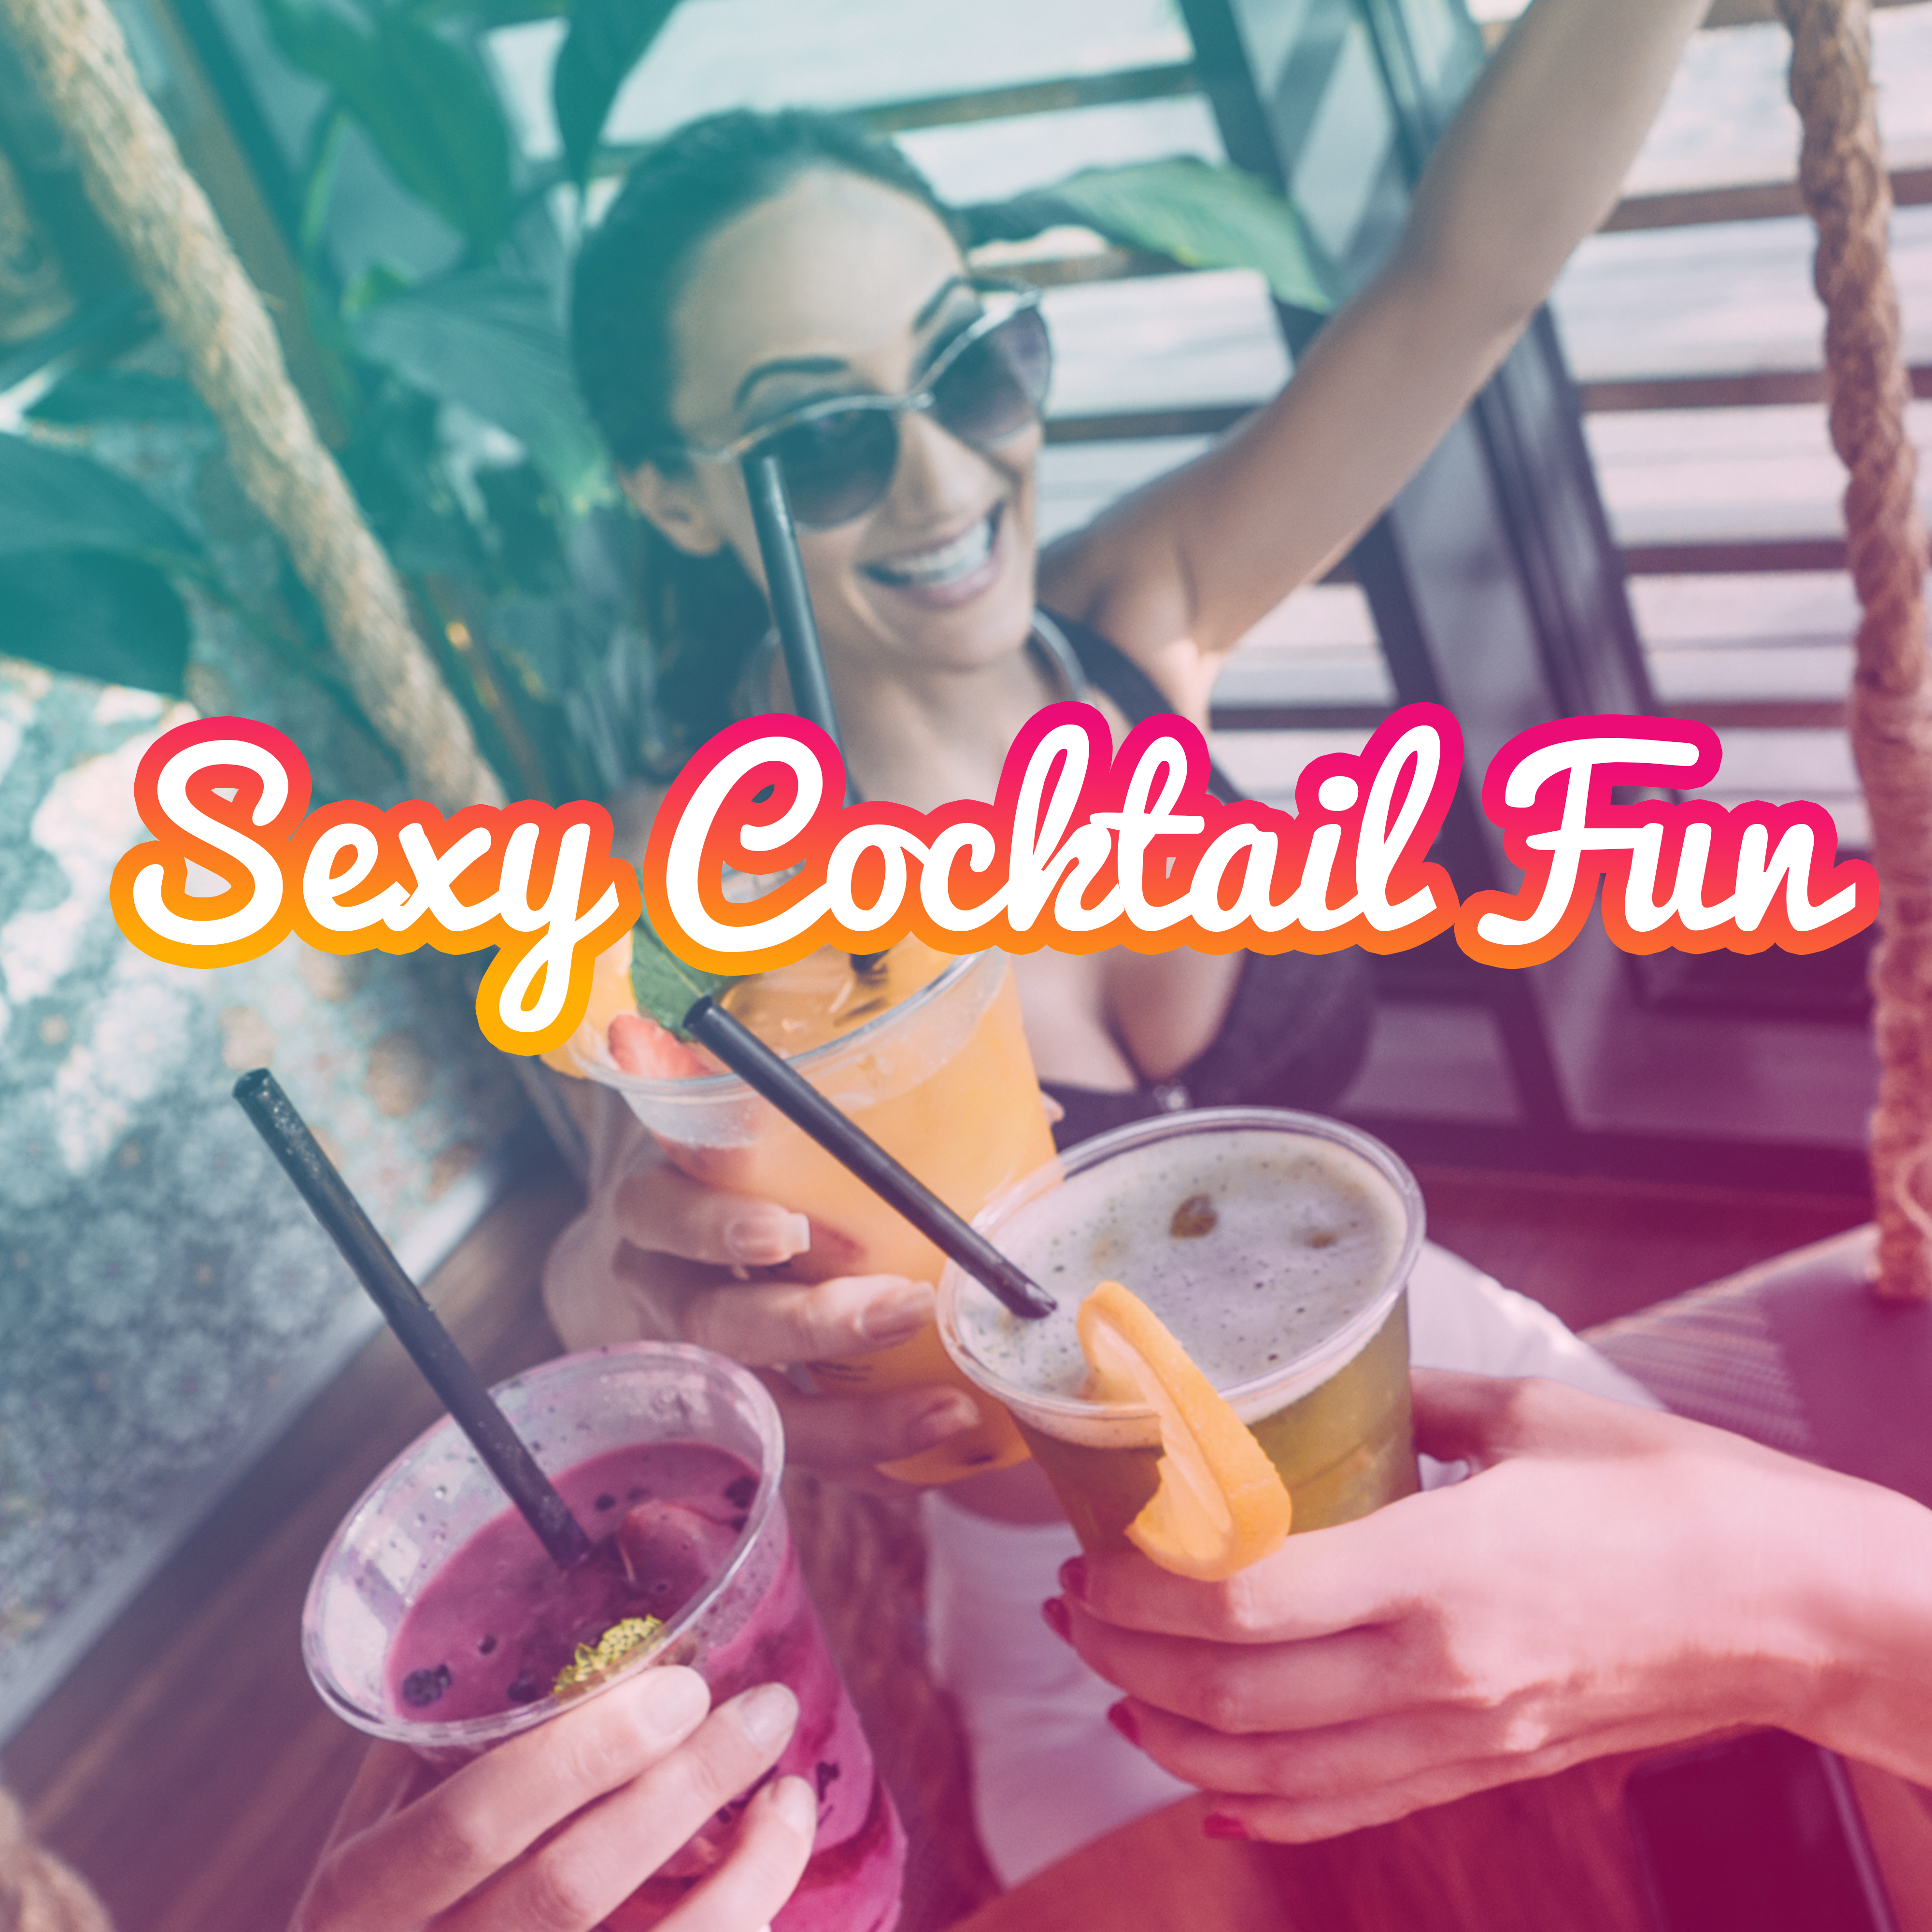 **** Cocktail Fun - Best Set for Parties, Dances, Banquets, Melanges, Discos and Home Events